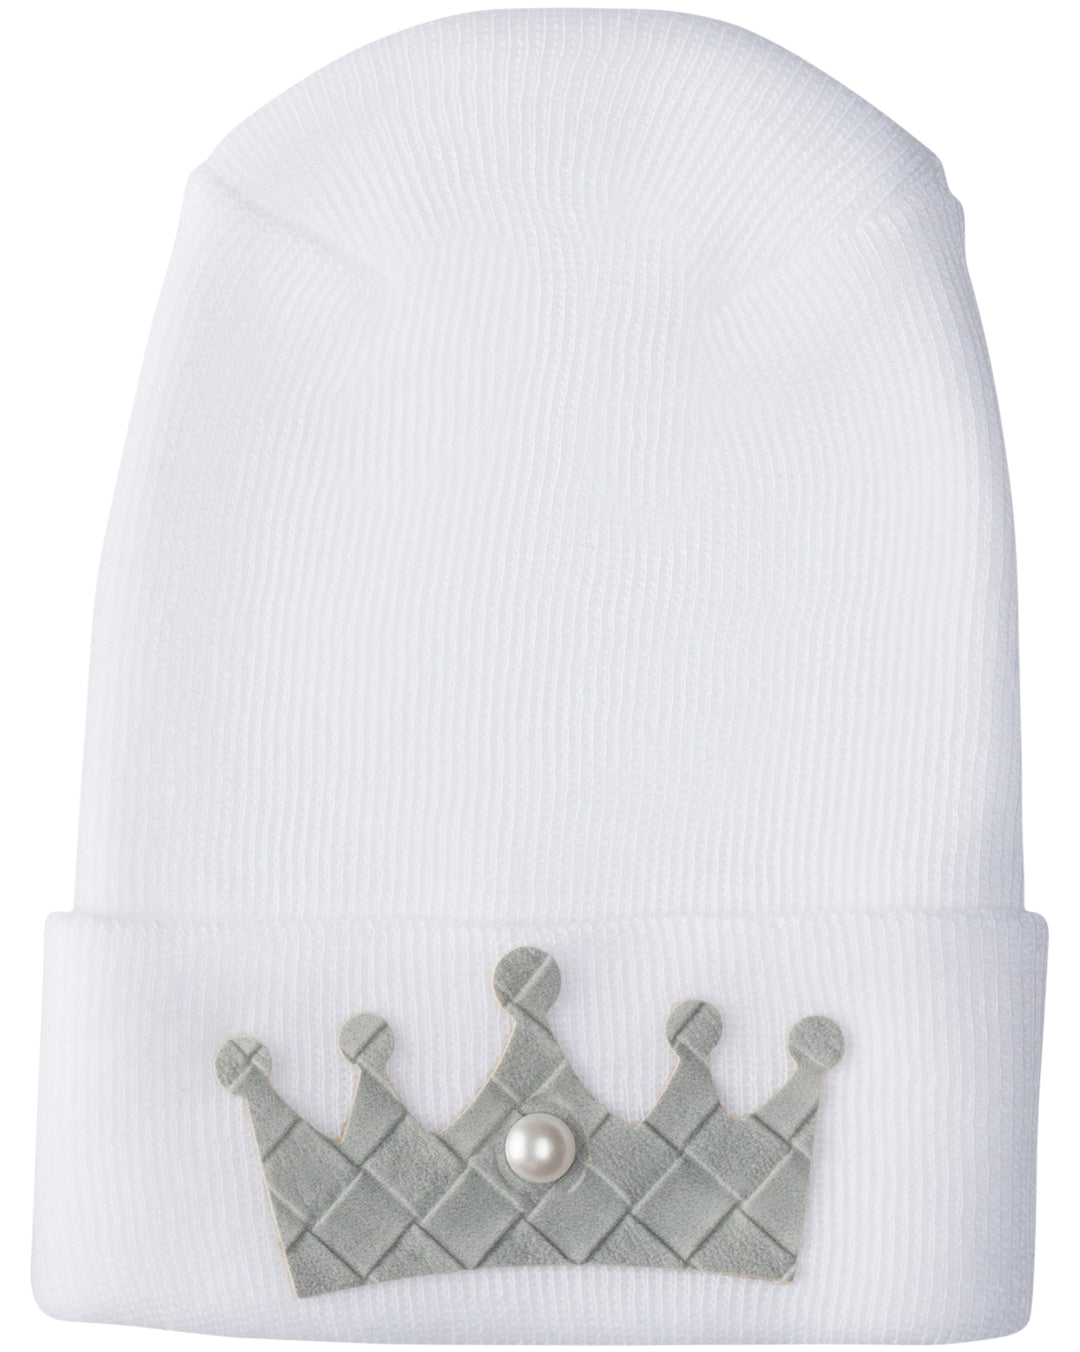 ADORA Hospital hat-Sky Crown